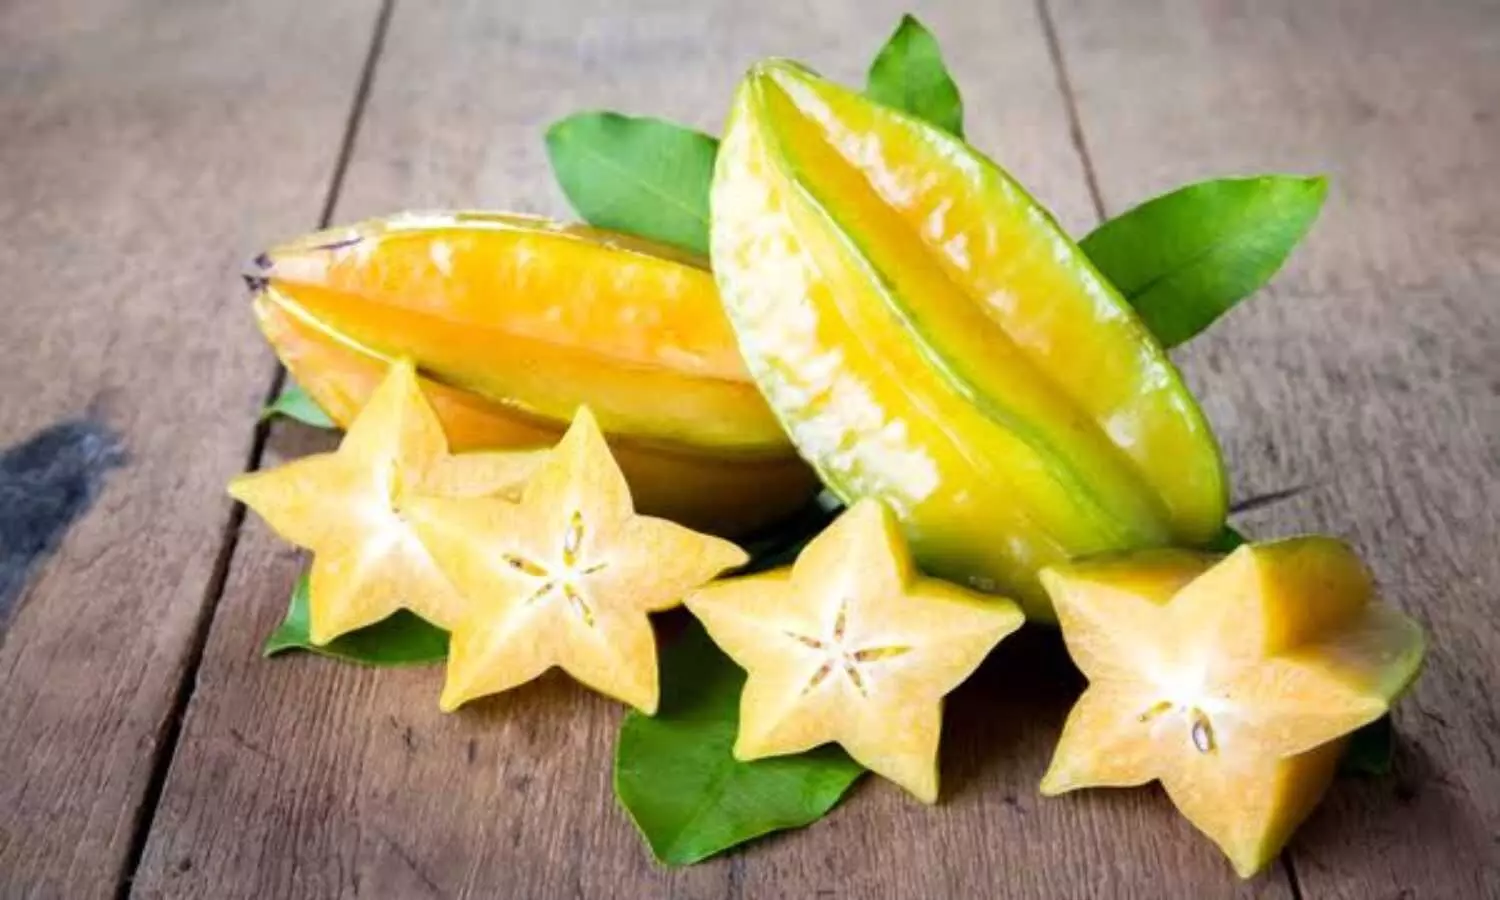 Benefits of star fruit